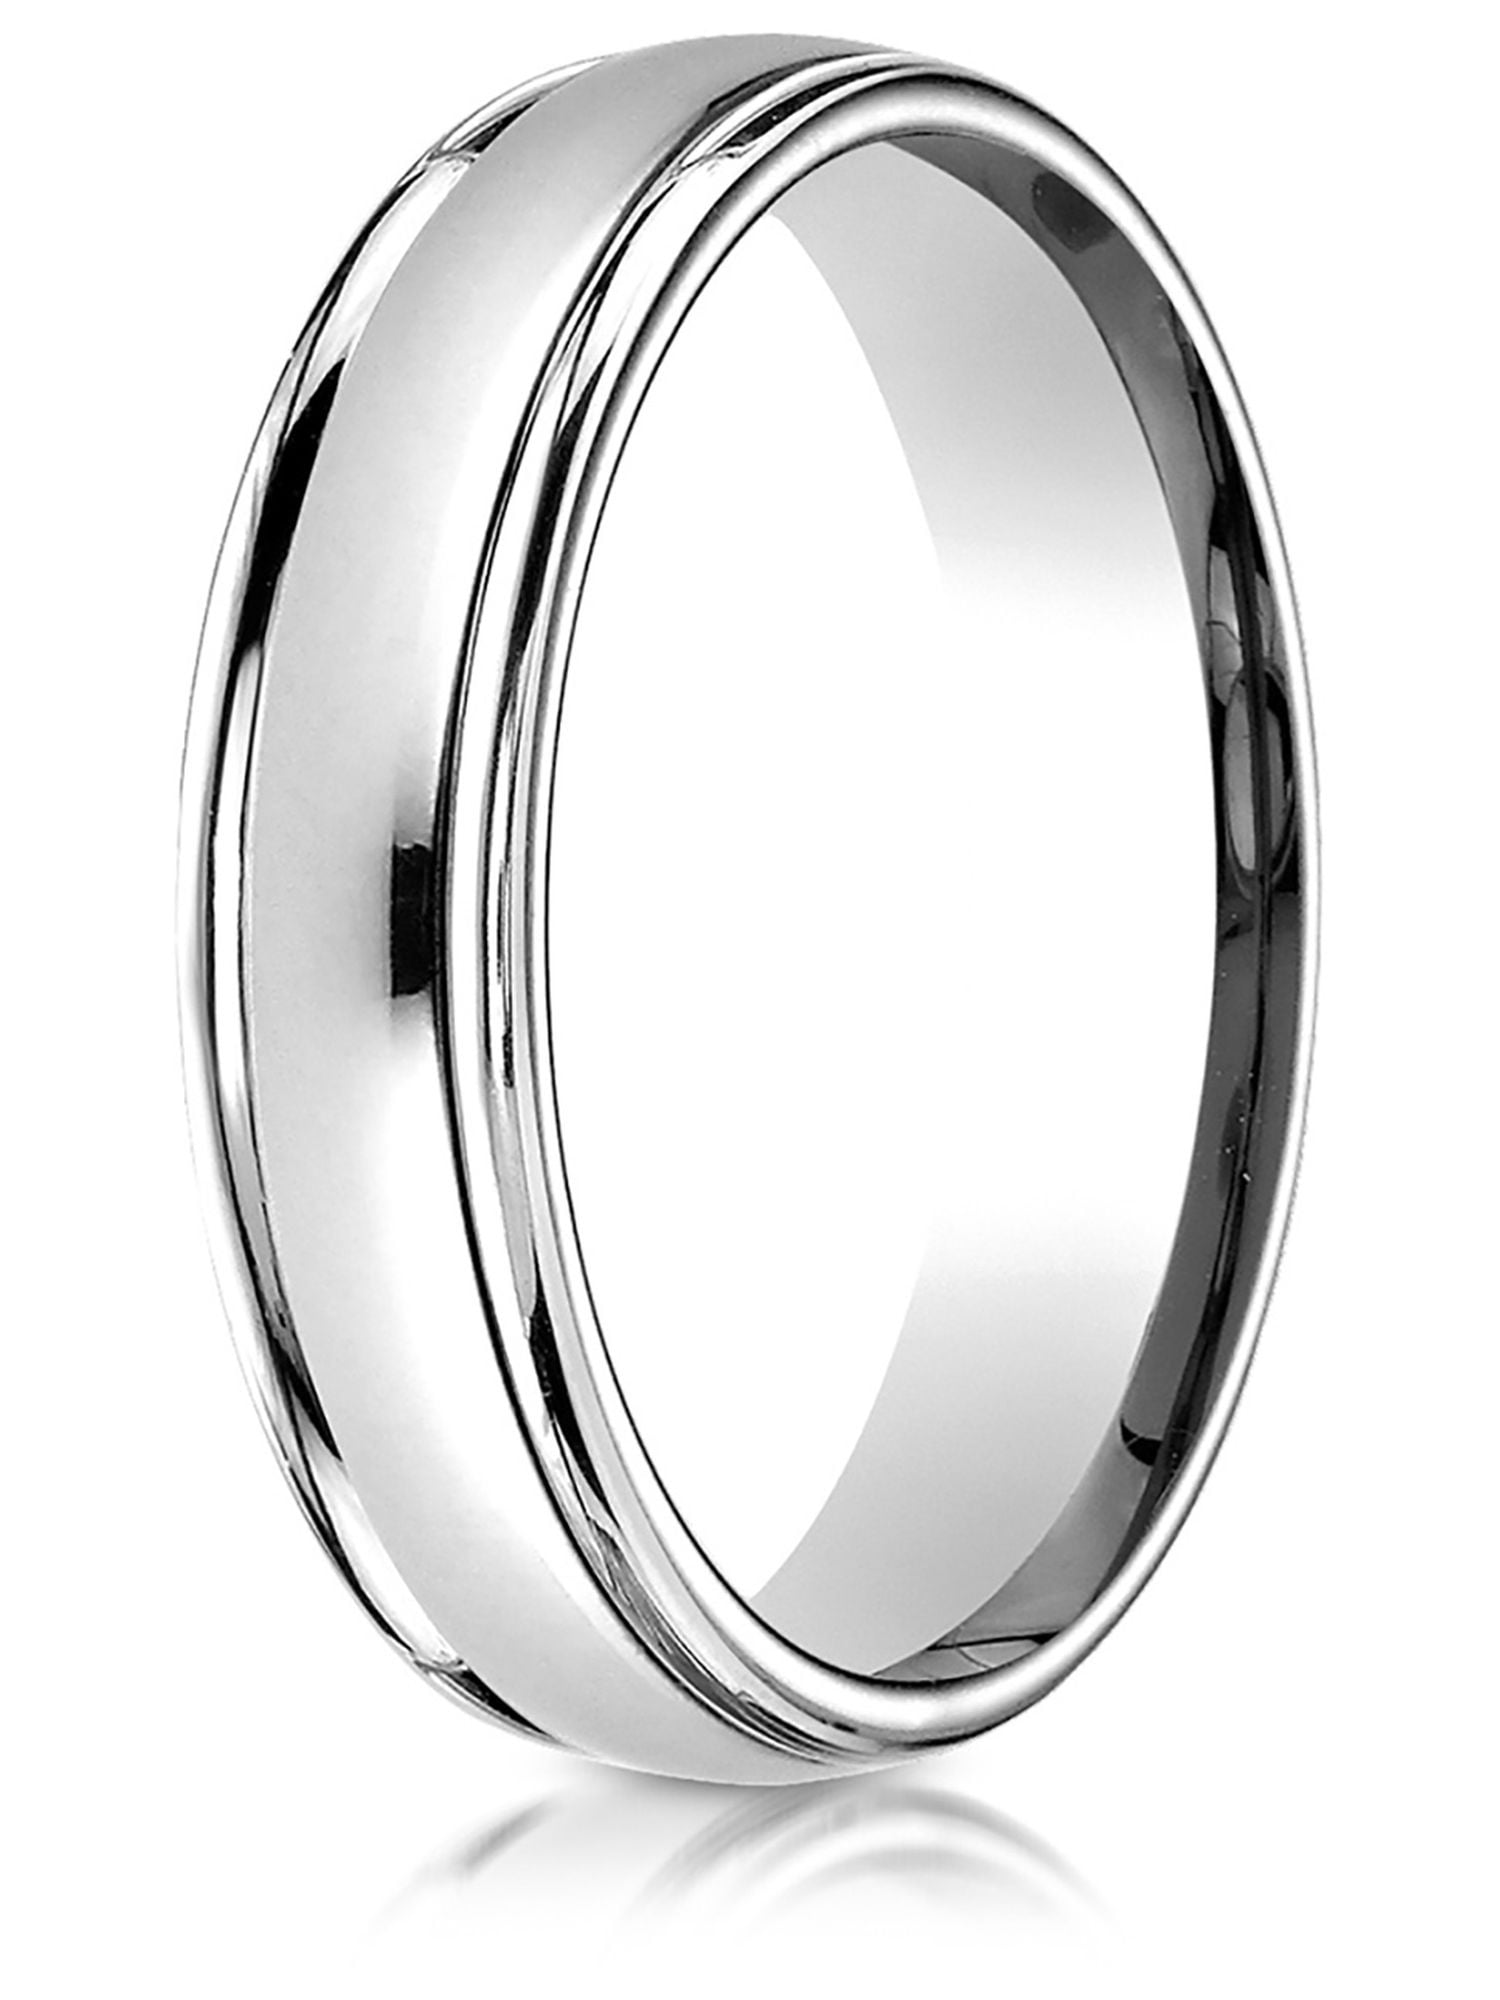 Benchmark 14K White Gold 2mm High Polished Carved Design Wedding Band Ring Sizes 4-15 